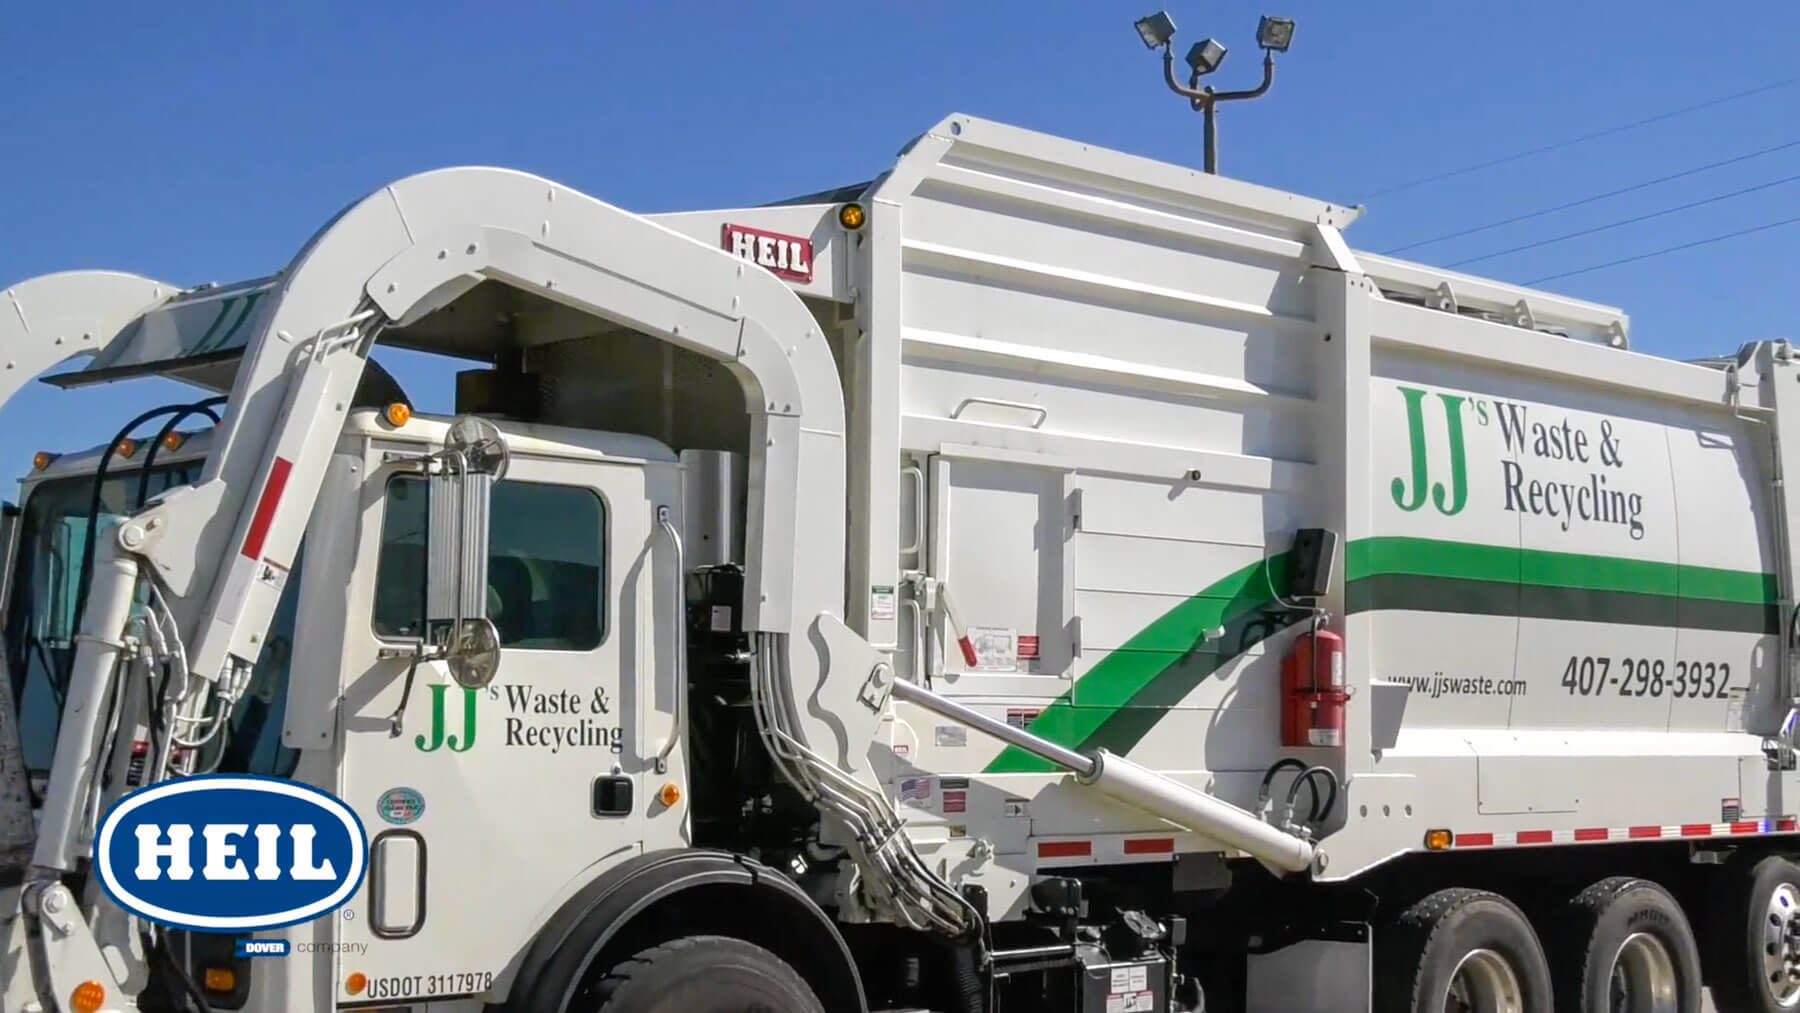 JJ's Waste & Recycling Garbage Truck Testimonial